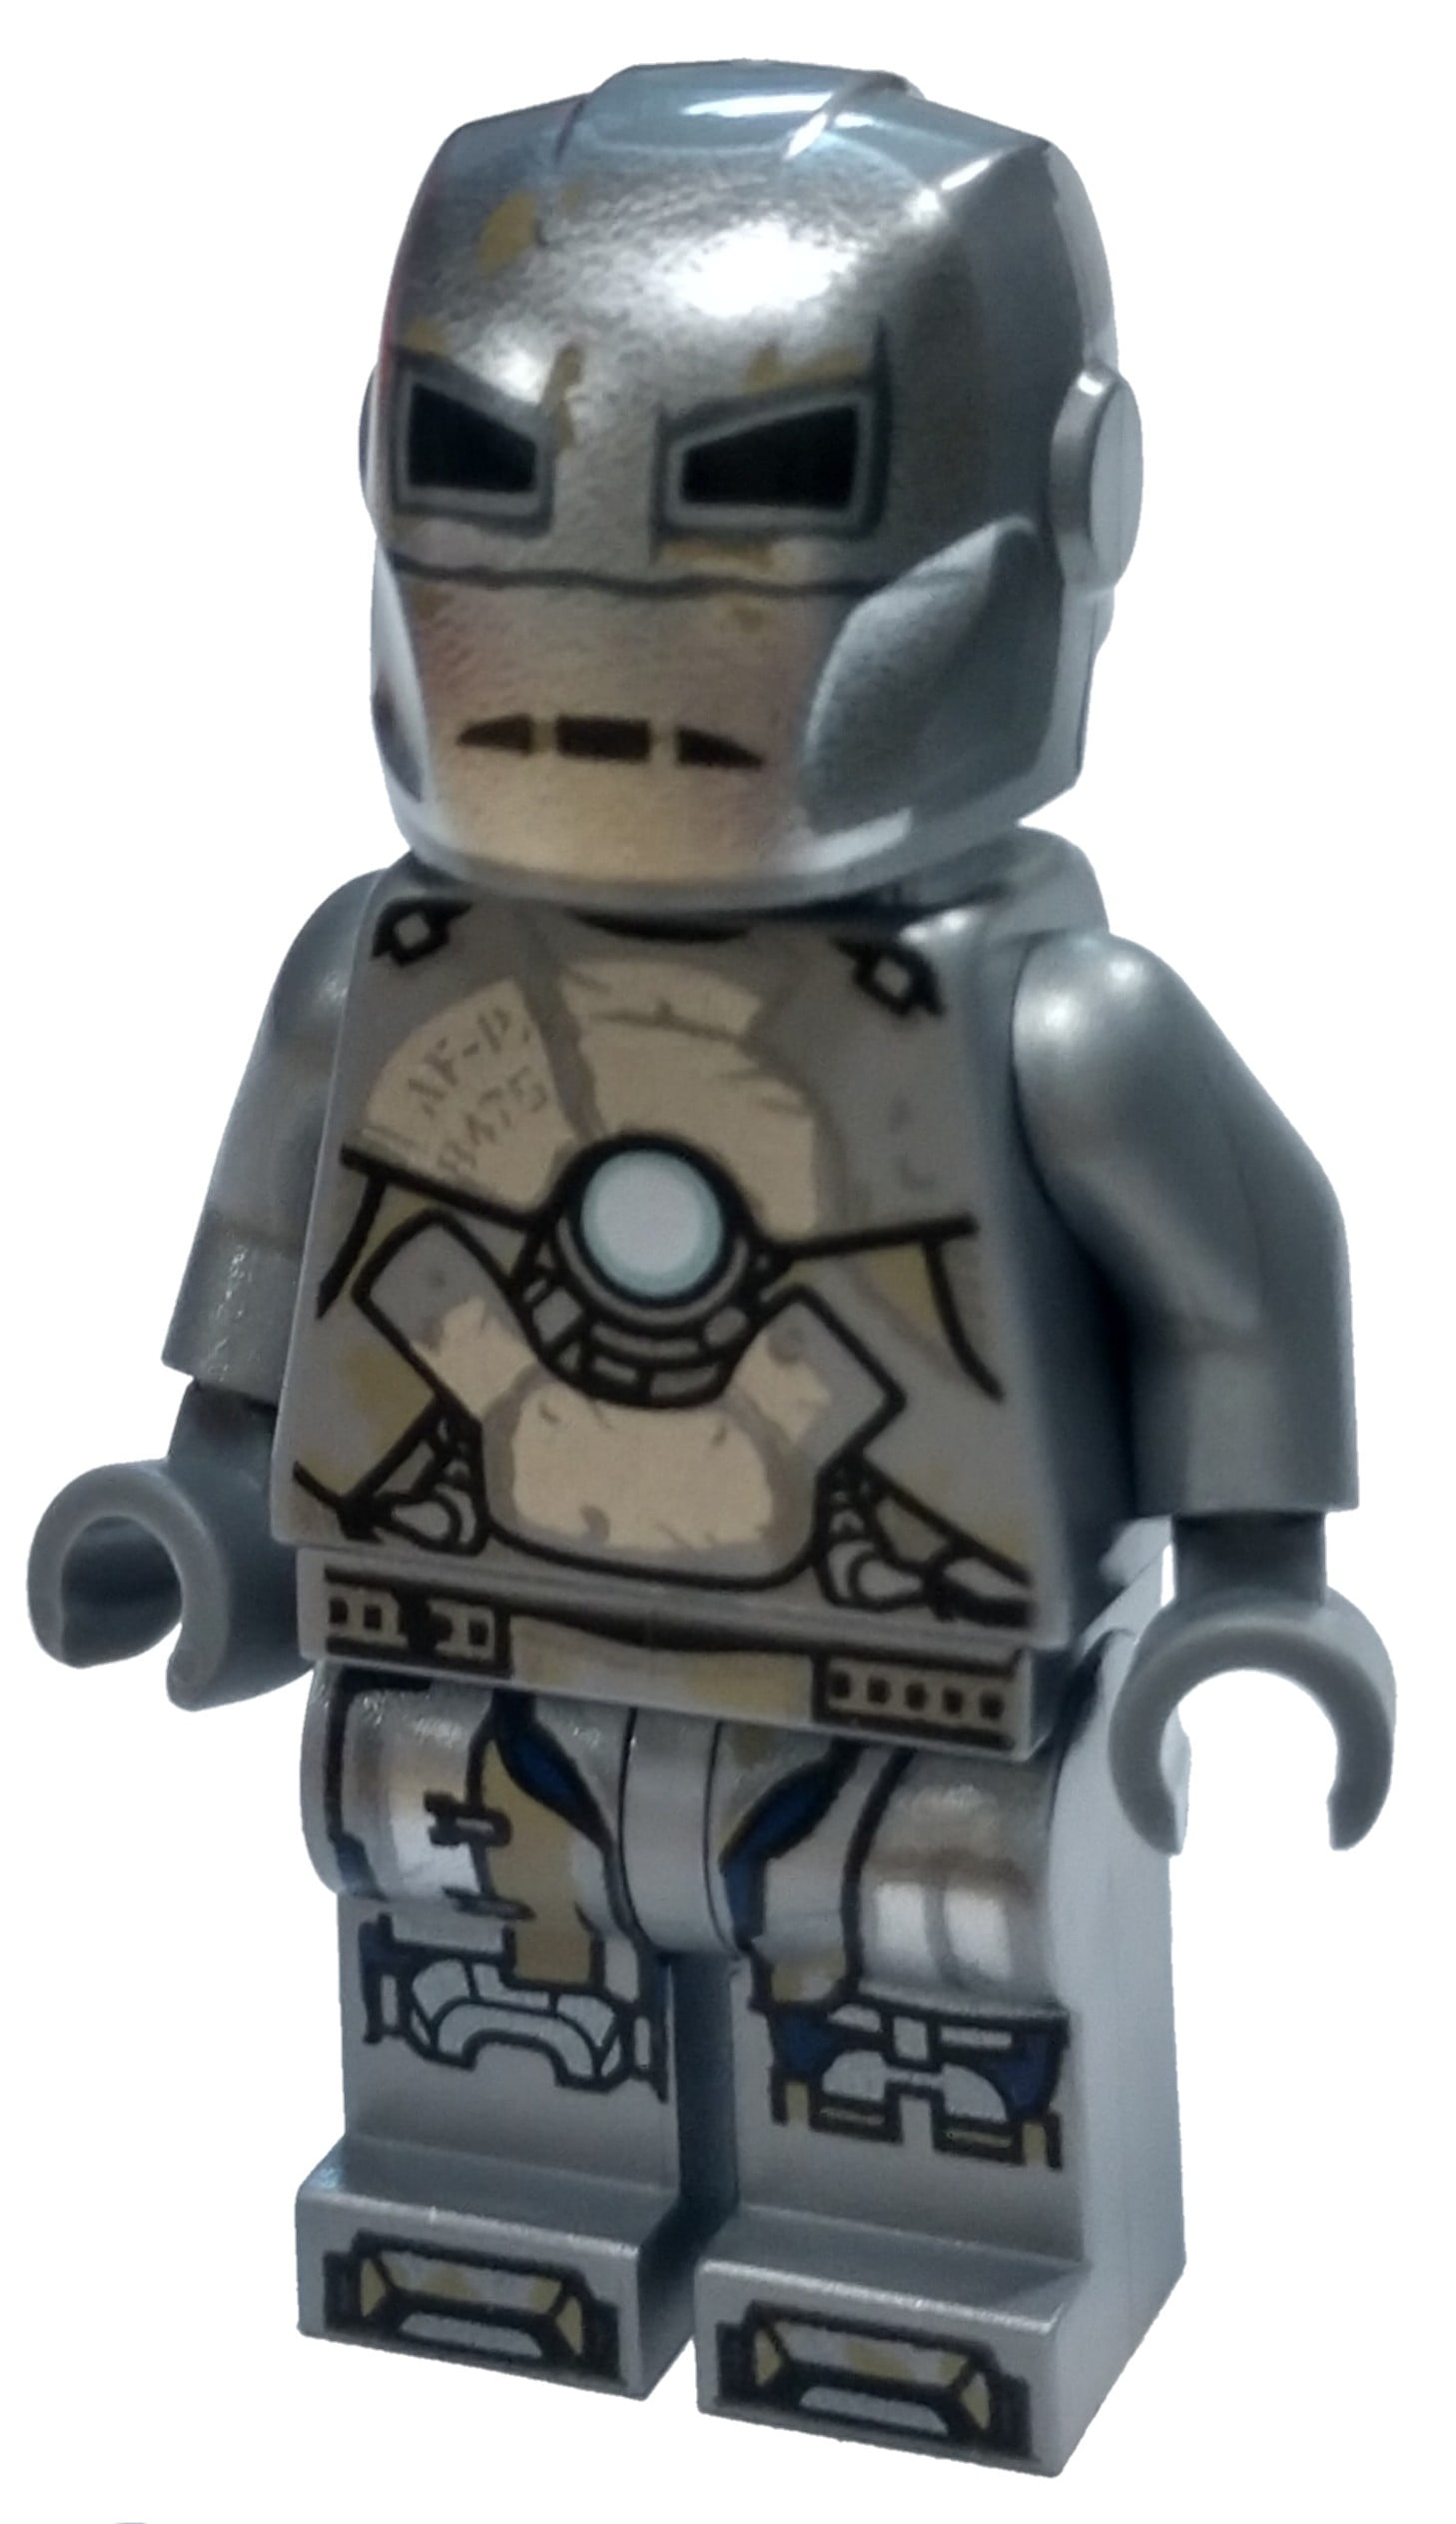 LEGO Avengers Endgame Iron Man Minifigures Tony Stark Armor Suits 76125 Rare 